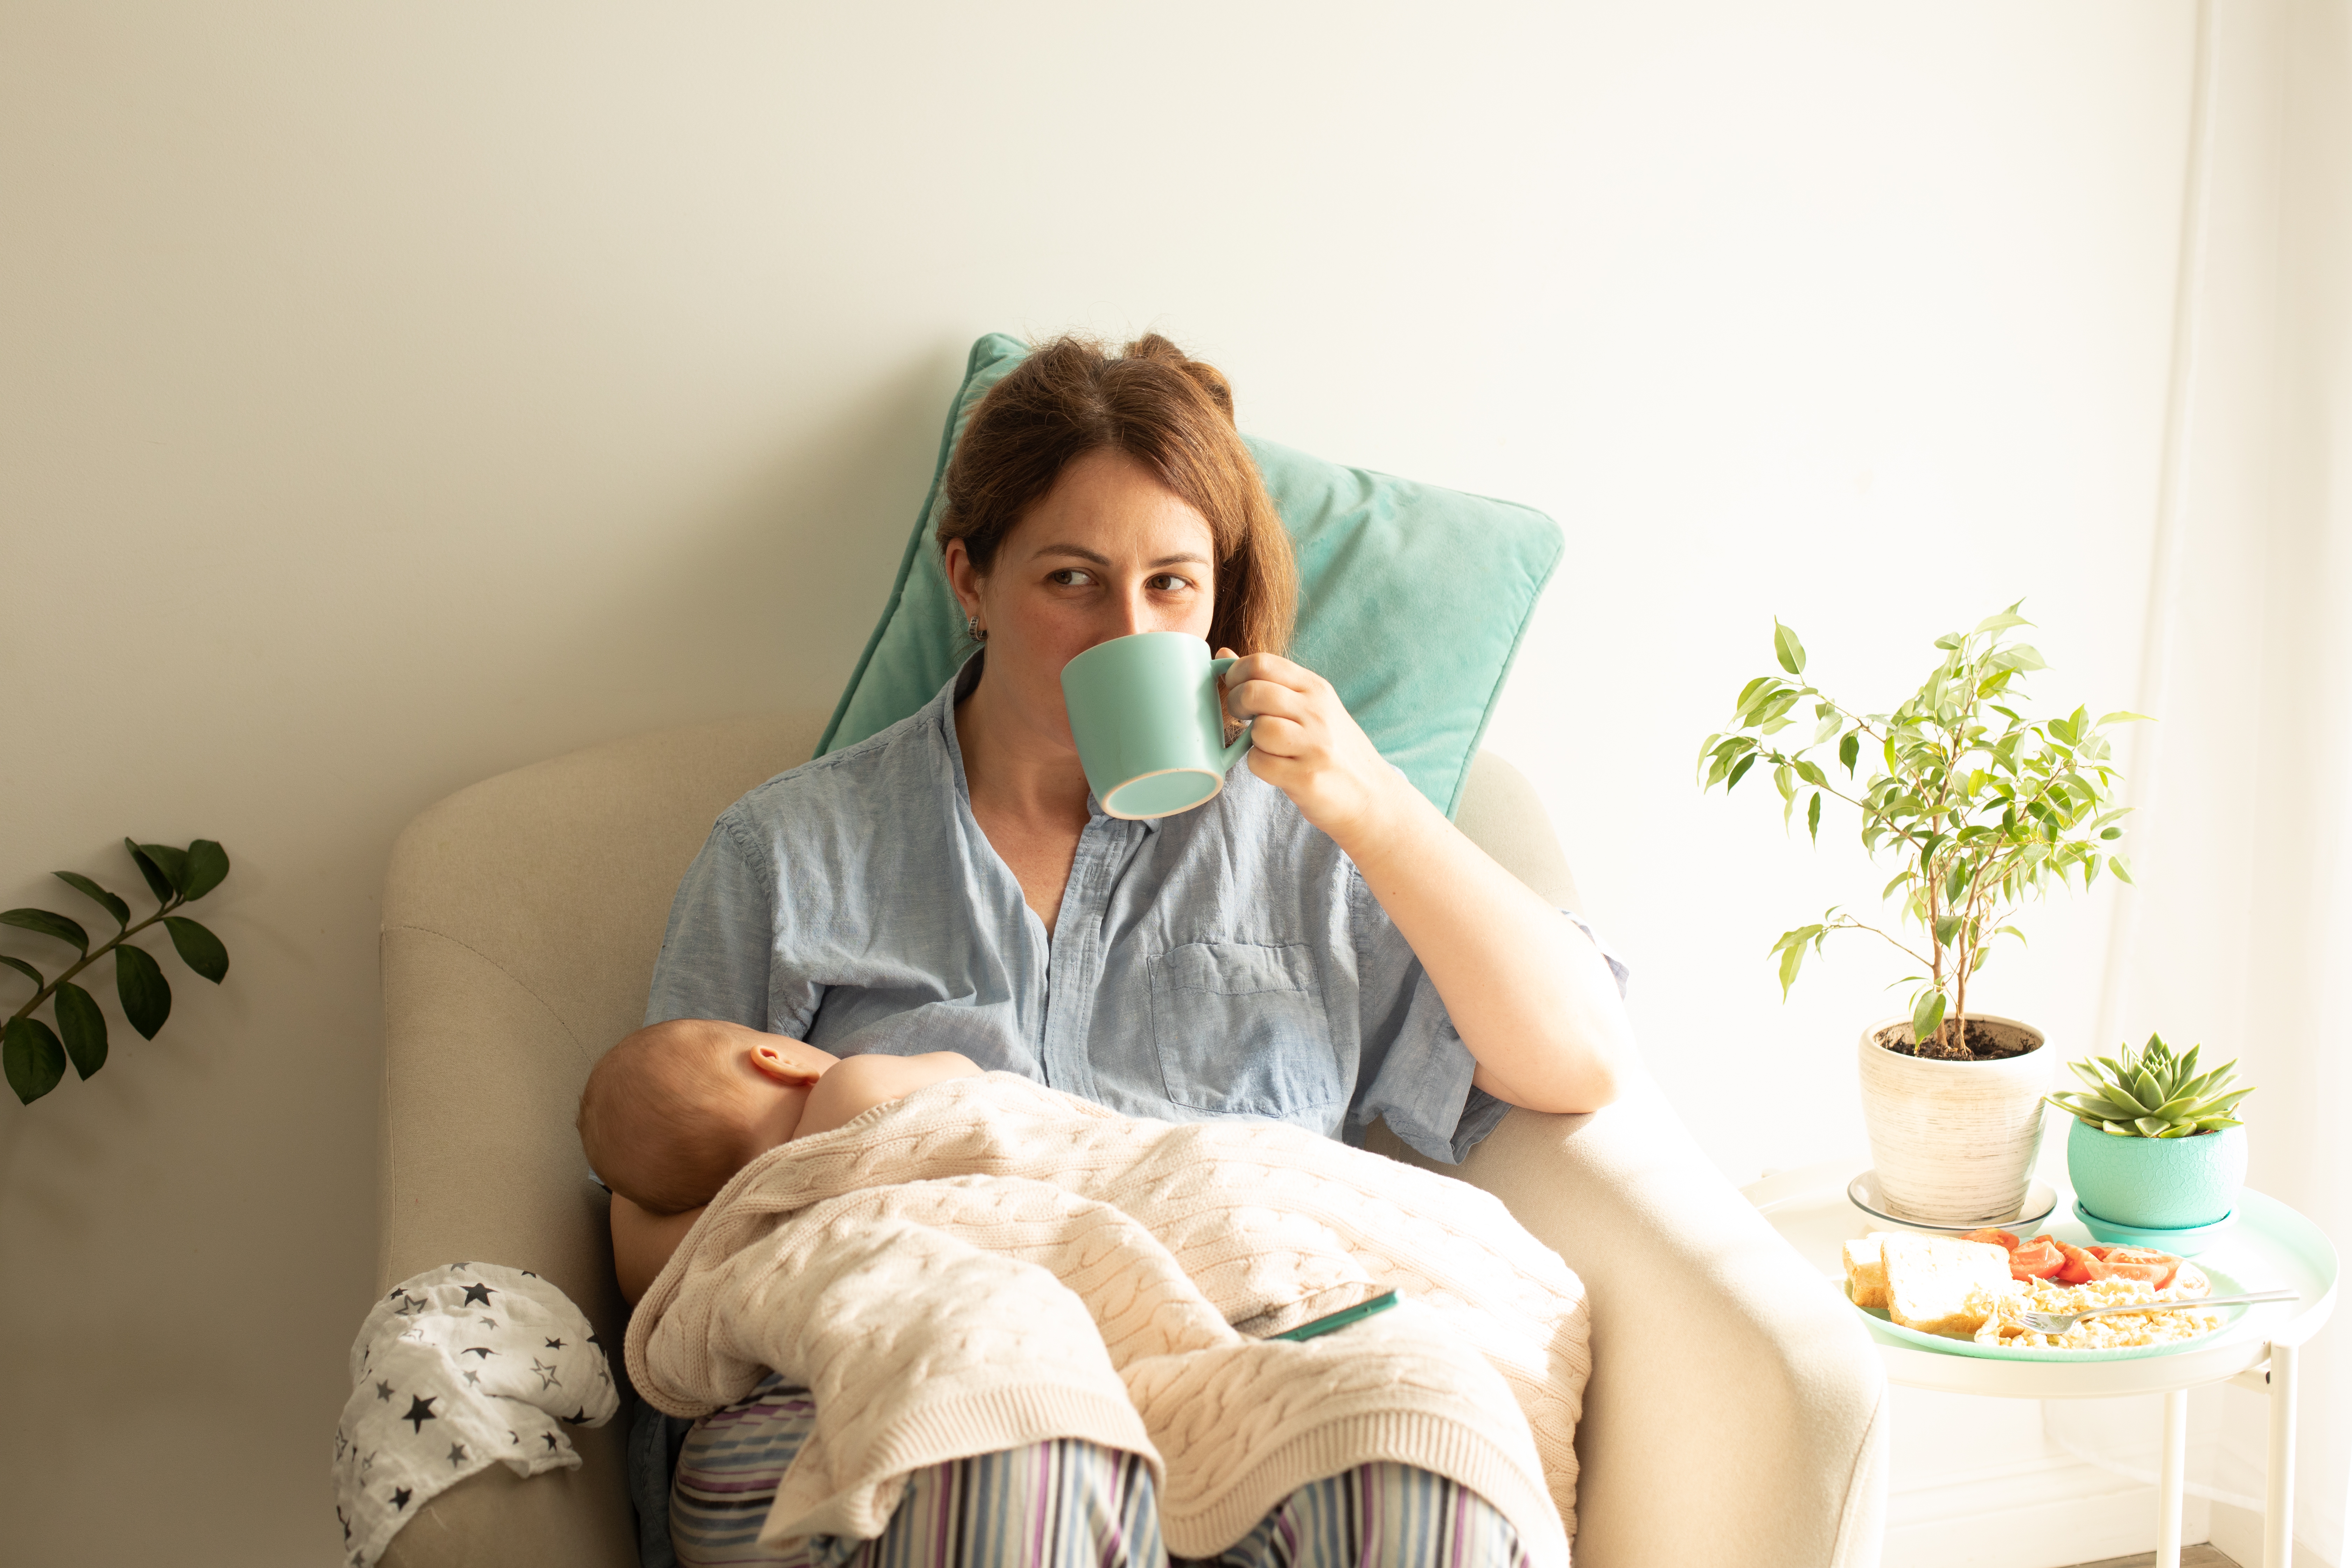 A woman breastfeeding her newborn while drinking tea | Source: Shutterstock